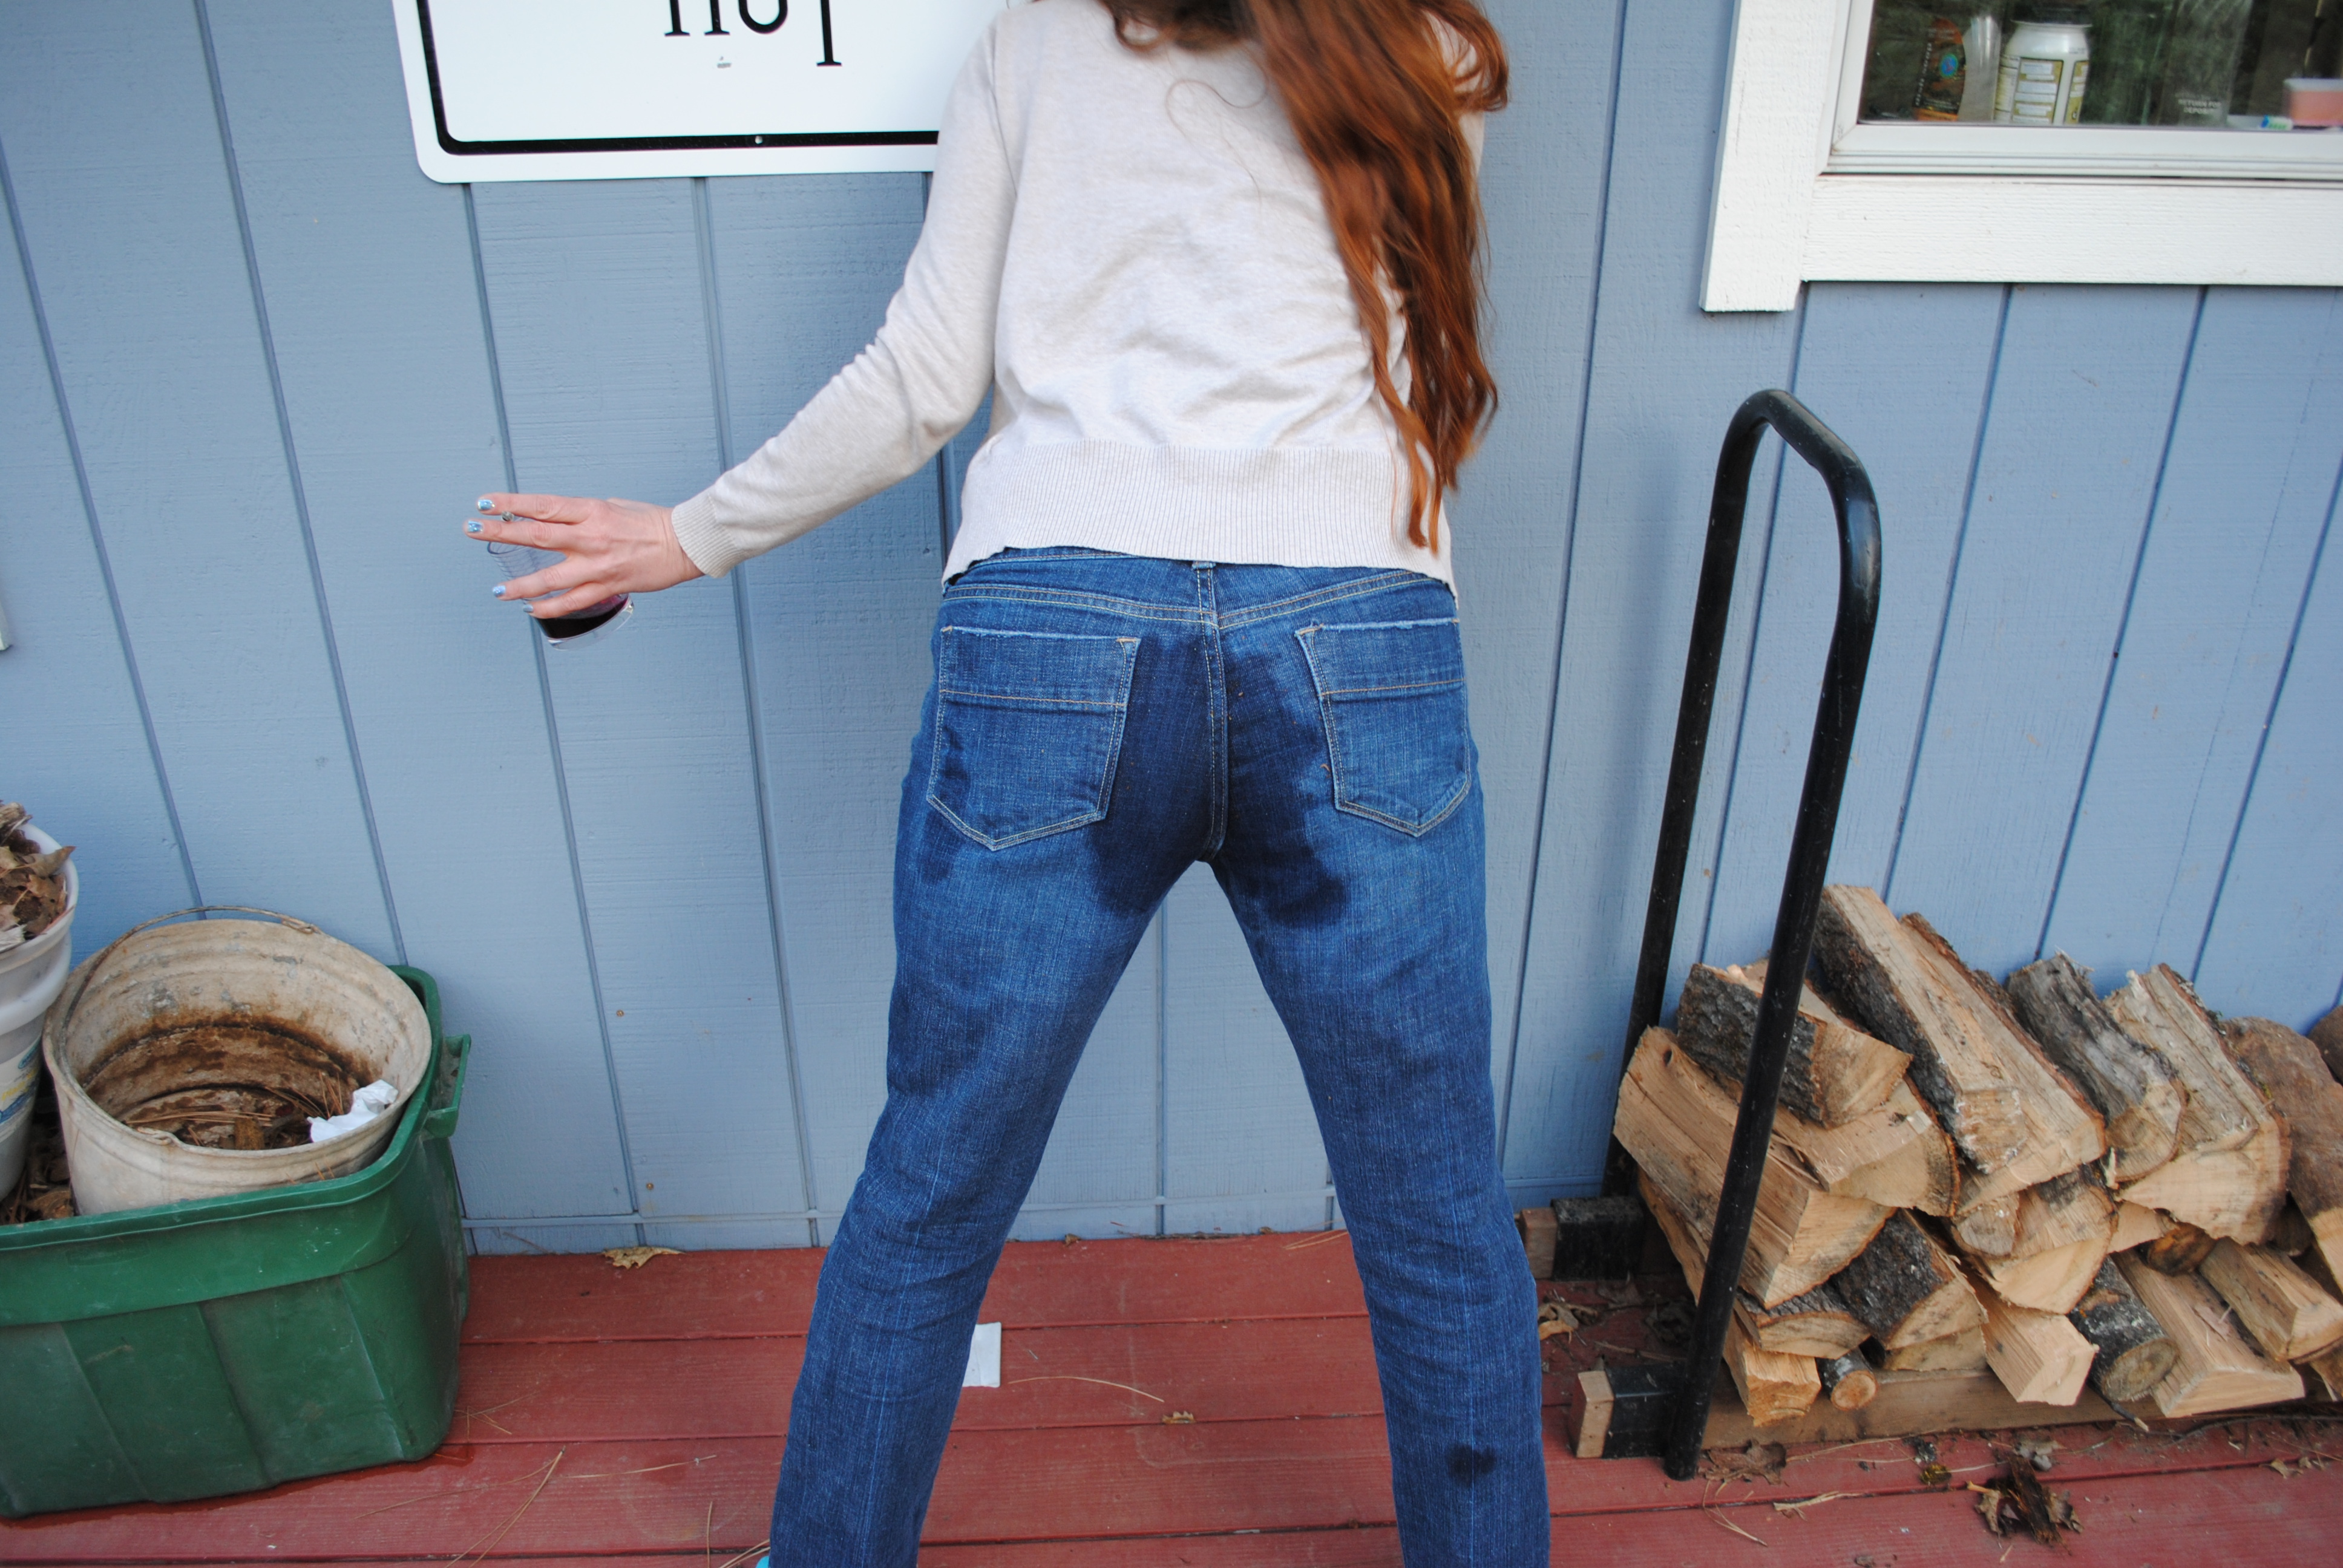 Stuck jeans photo